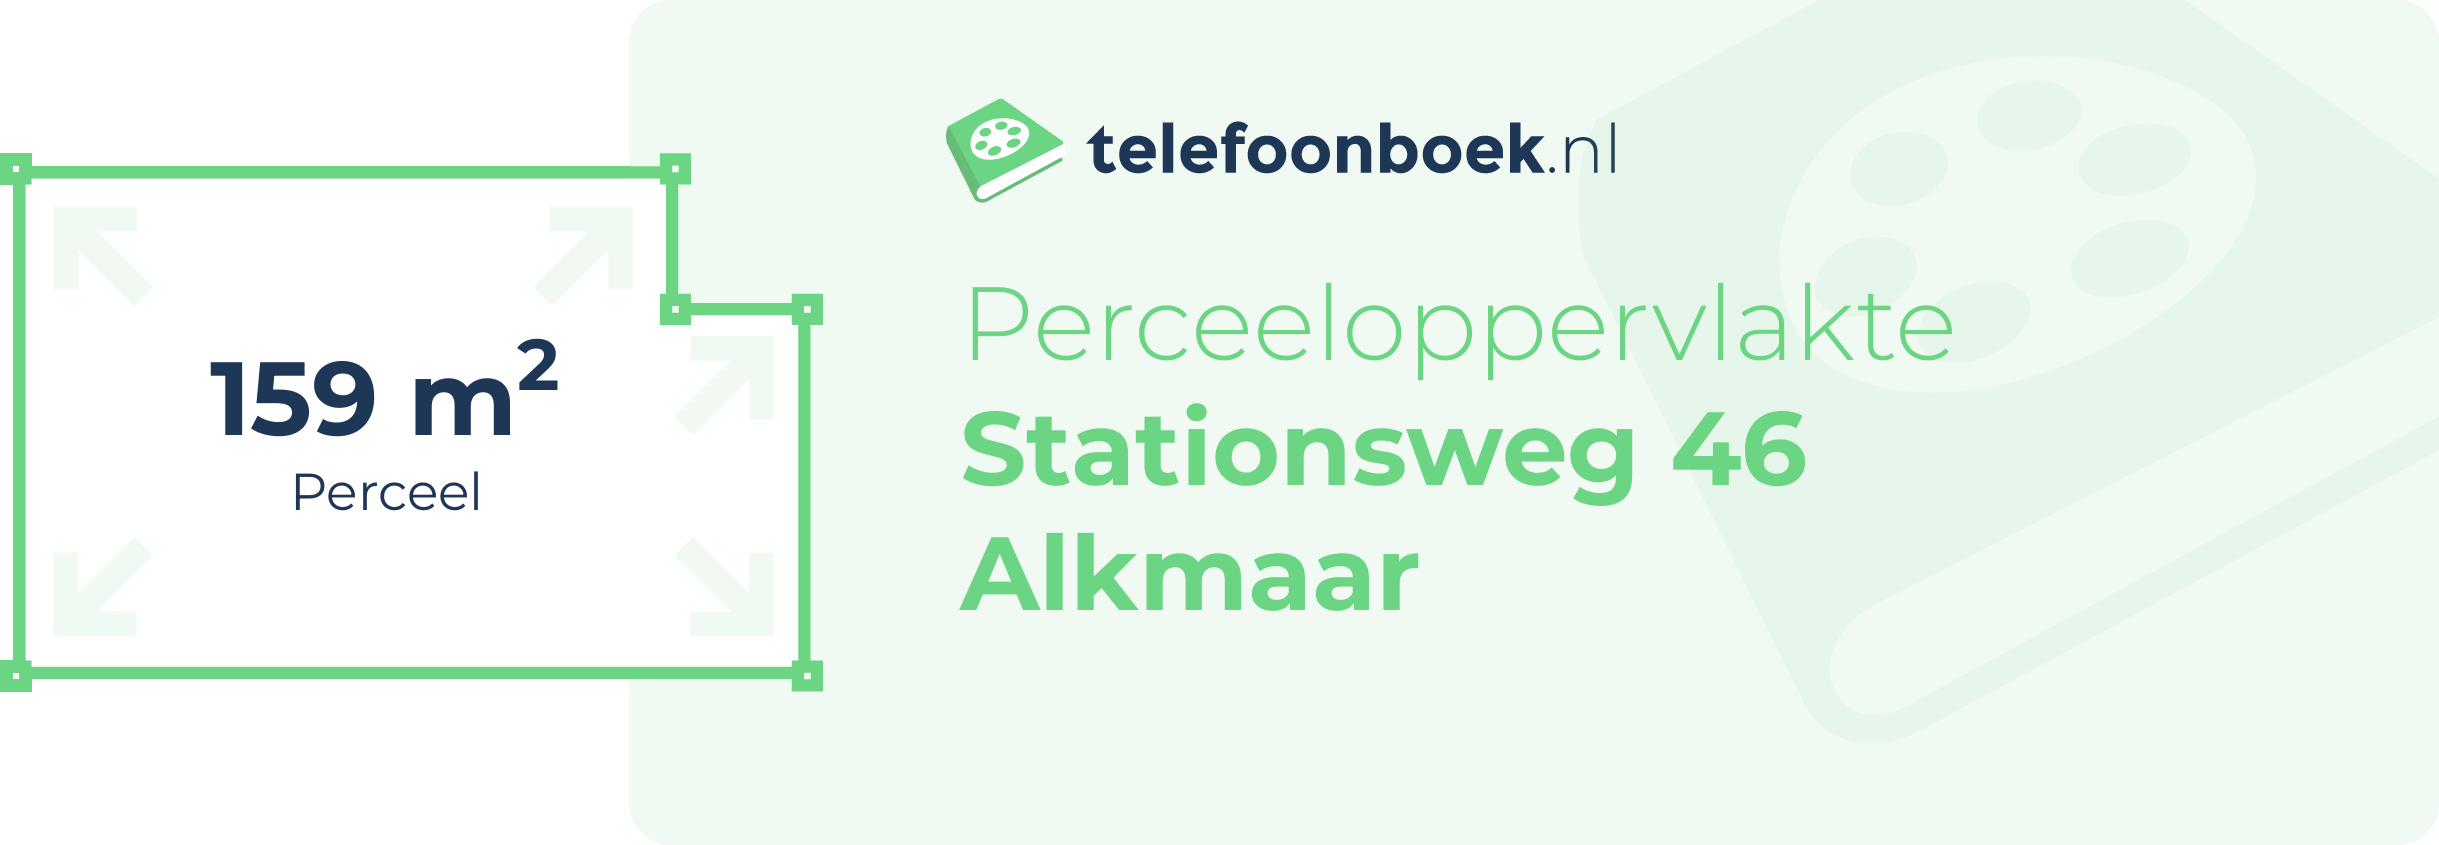 Perceeloppervlakte Stationsweg 46 Alkmaar